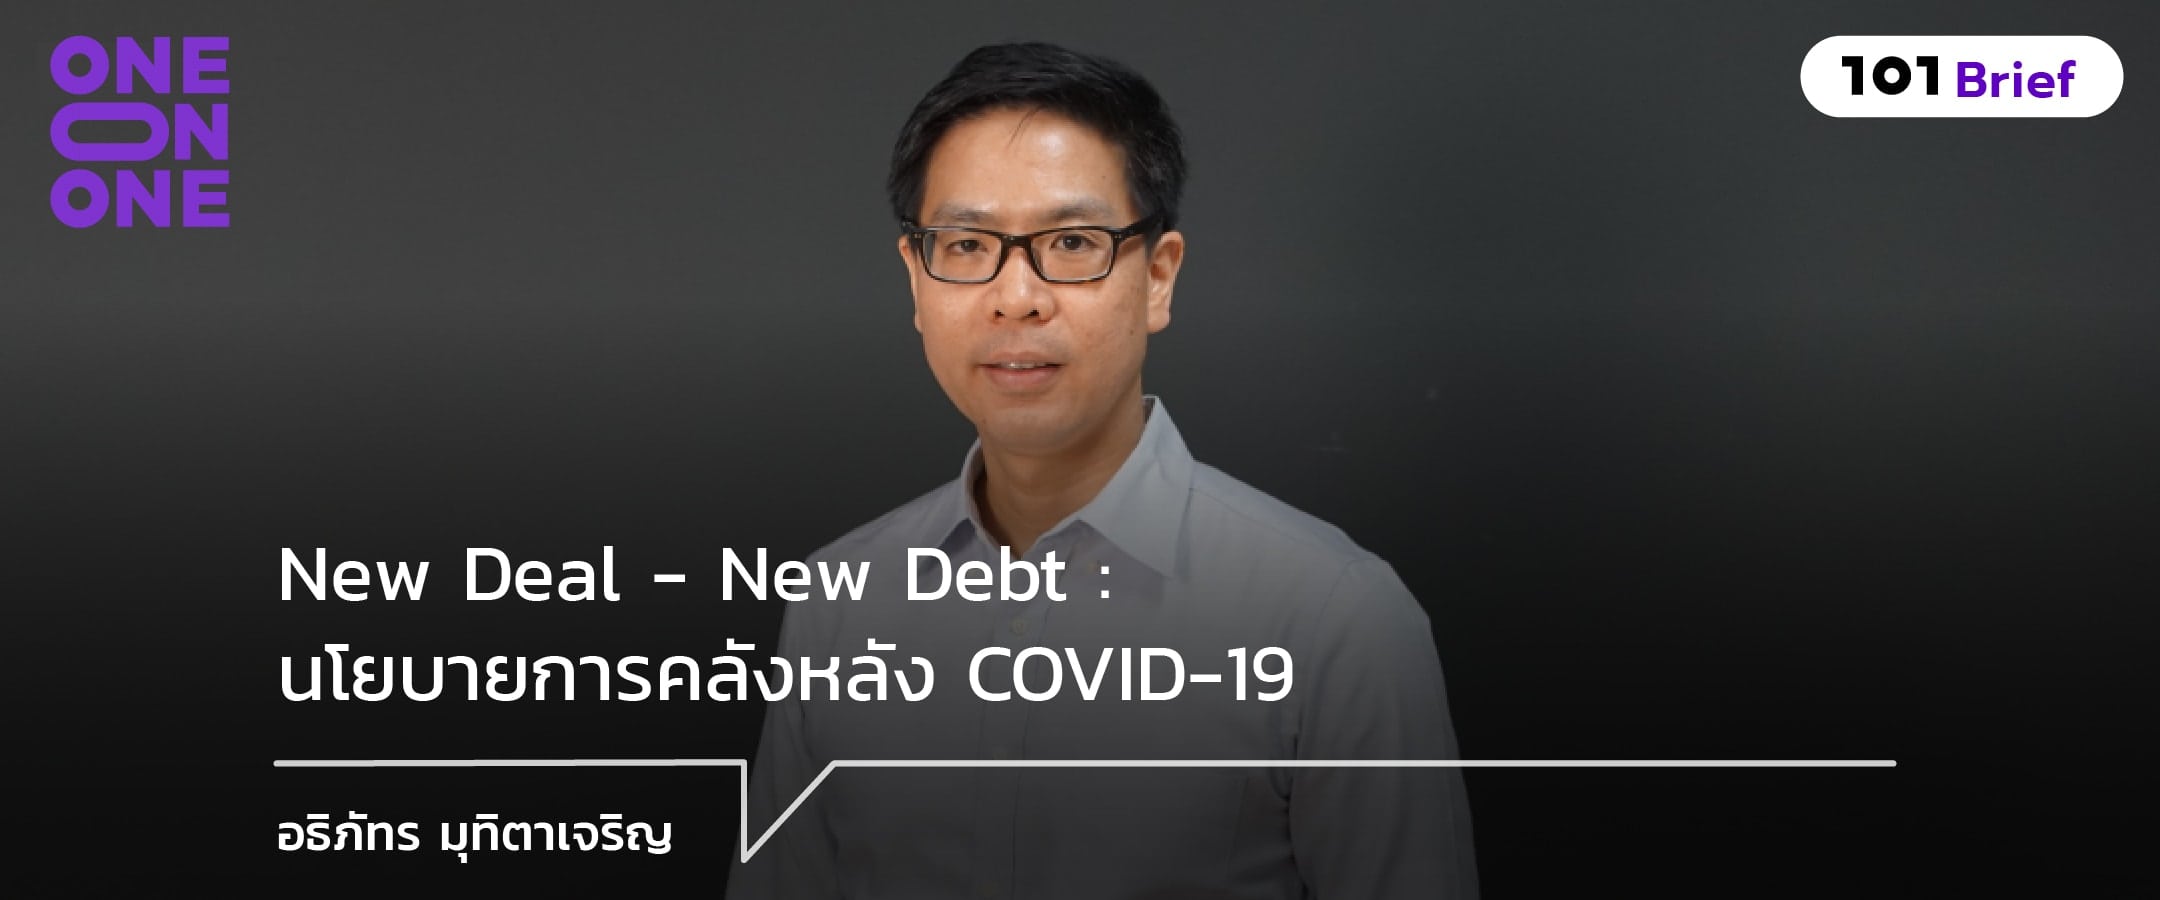 New Deal - New Debt : นโยบายการคลังหลัง COVID-19 กับ อธิภัทร มุทิตาเจริญ